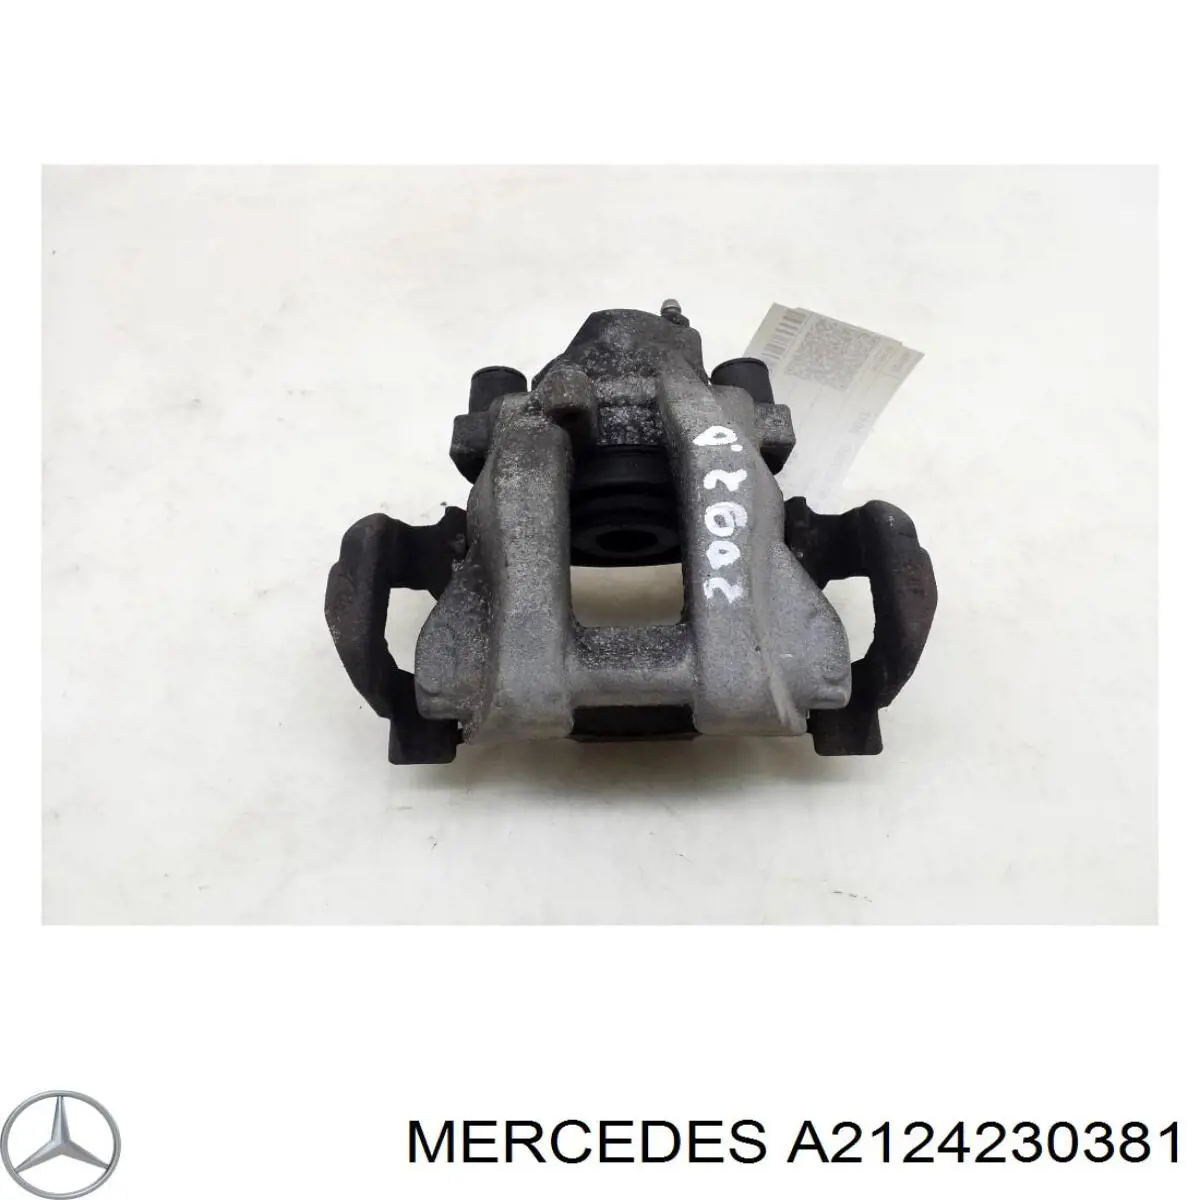 A2124230381 Mercedes suporte do freio traseiro direito